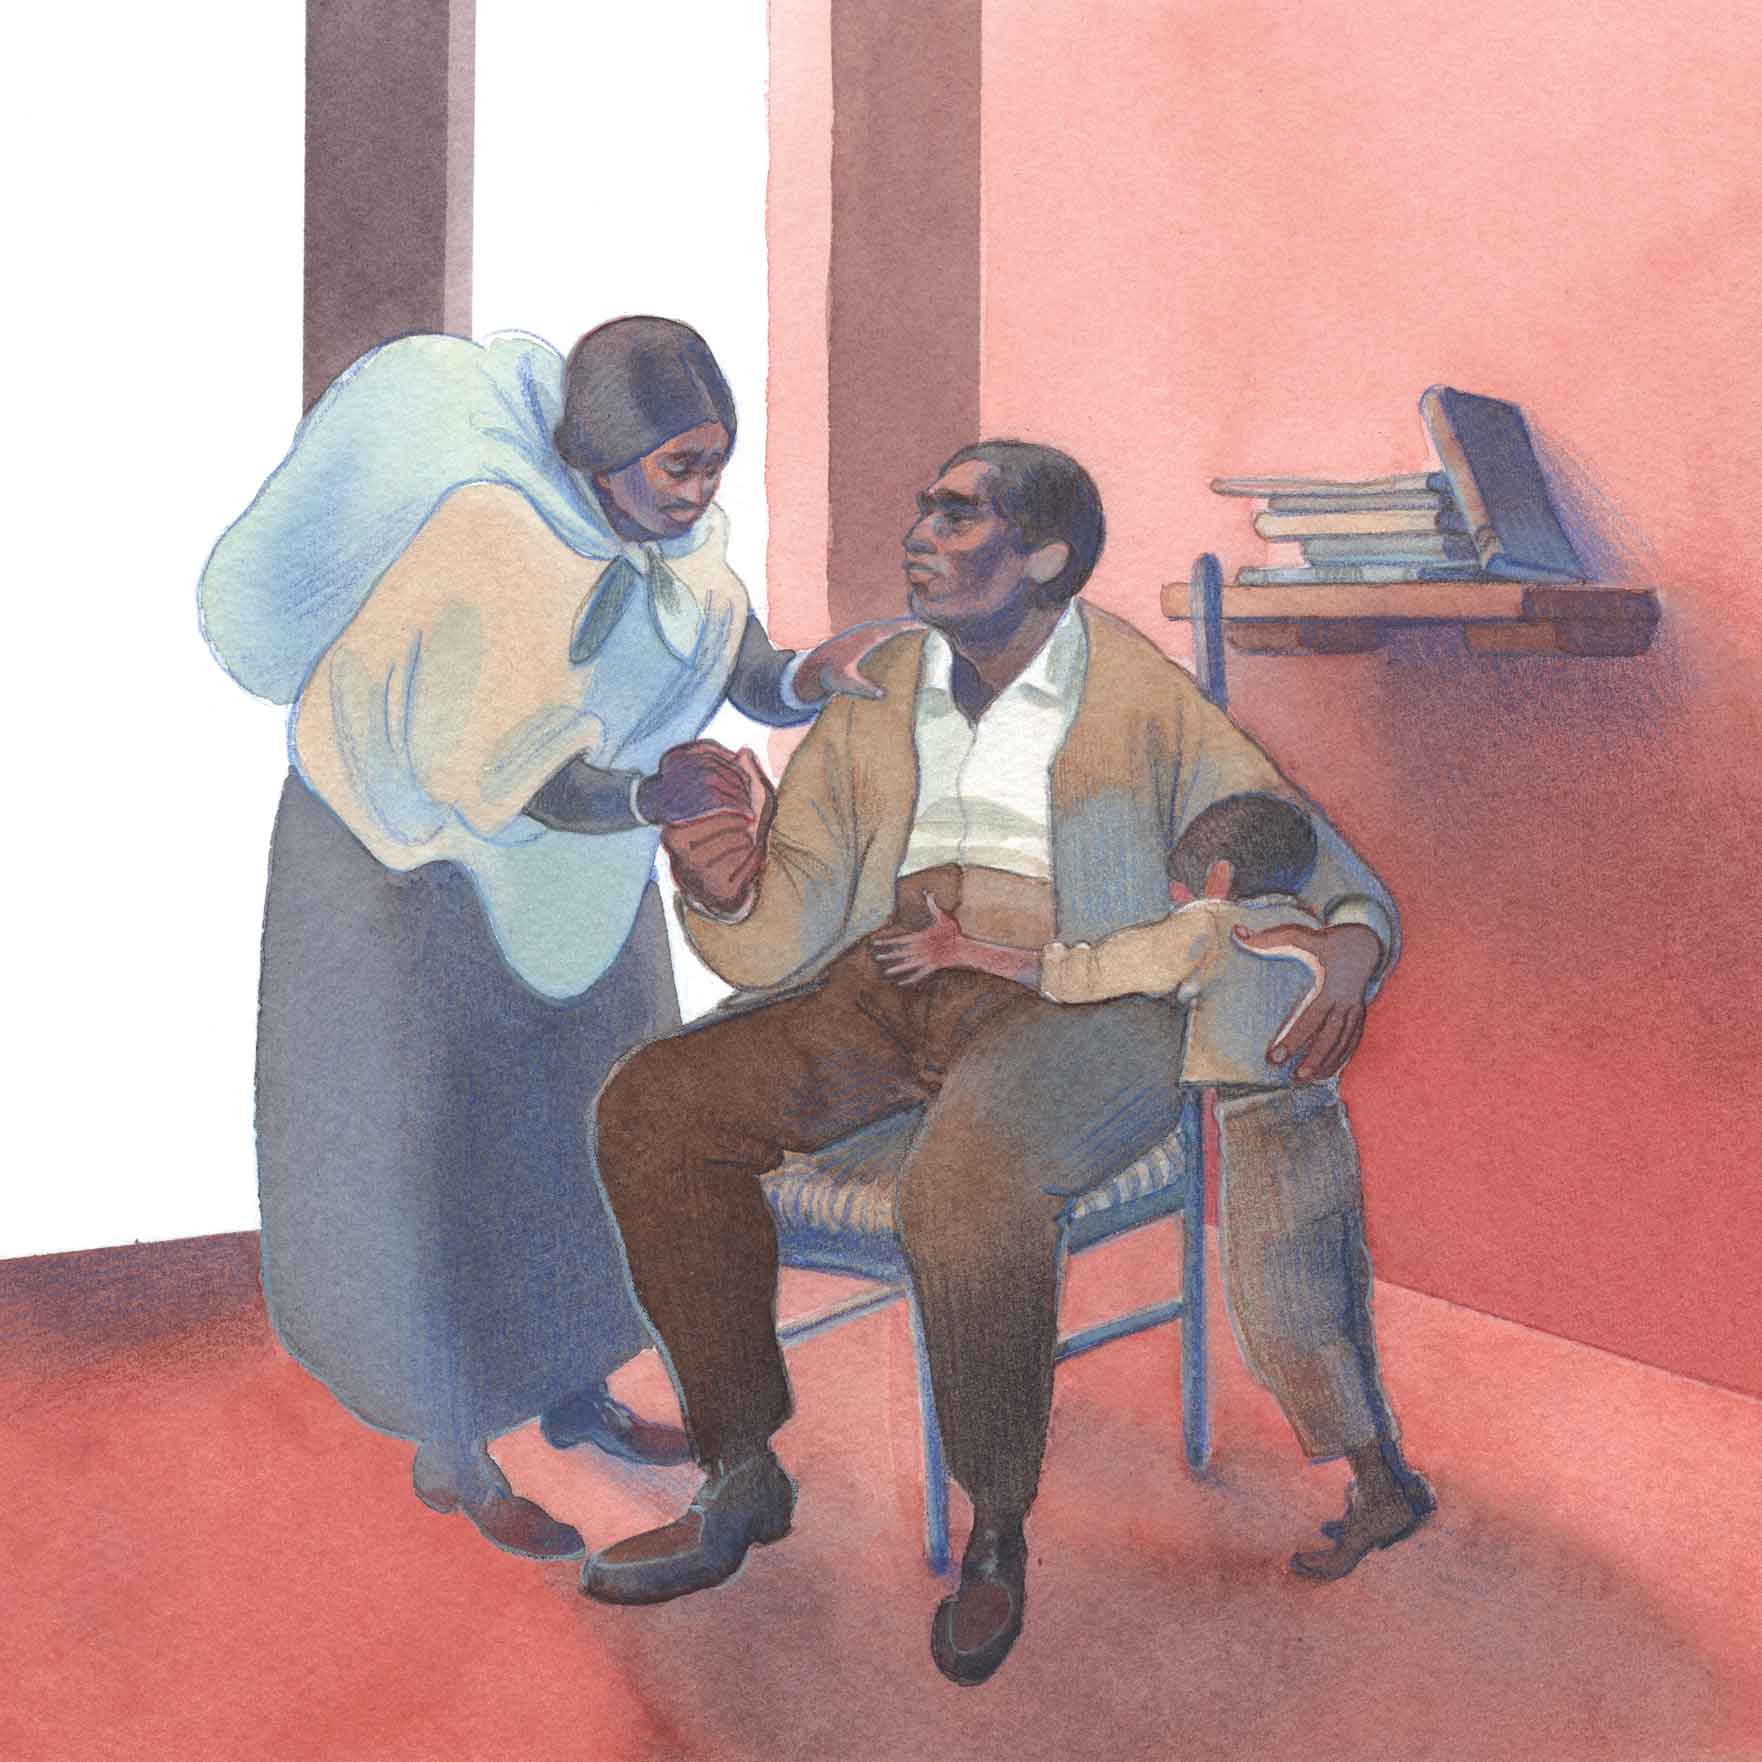 Illustration by Eva Sánchez Gómez for "Uncle Tom's cabin""